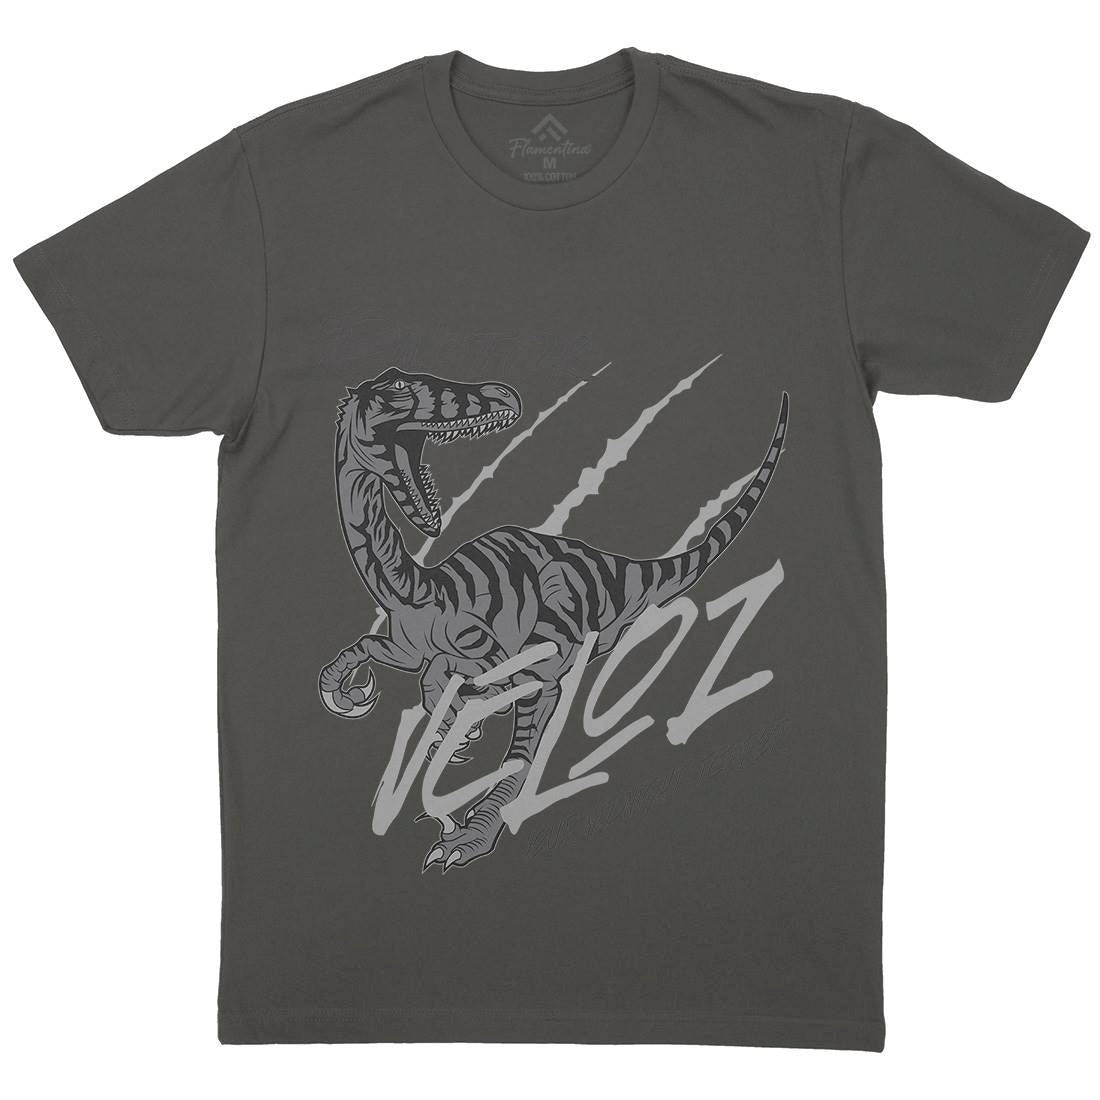 Raptor Terror Mens Organic Crew Neck T-Shirt Animals B753